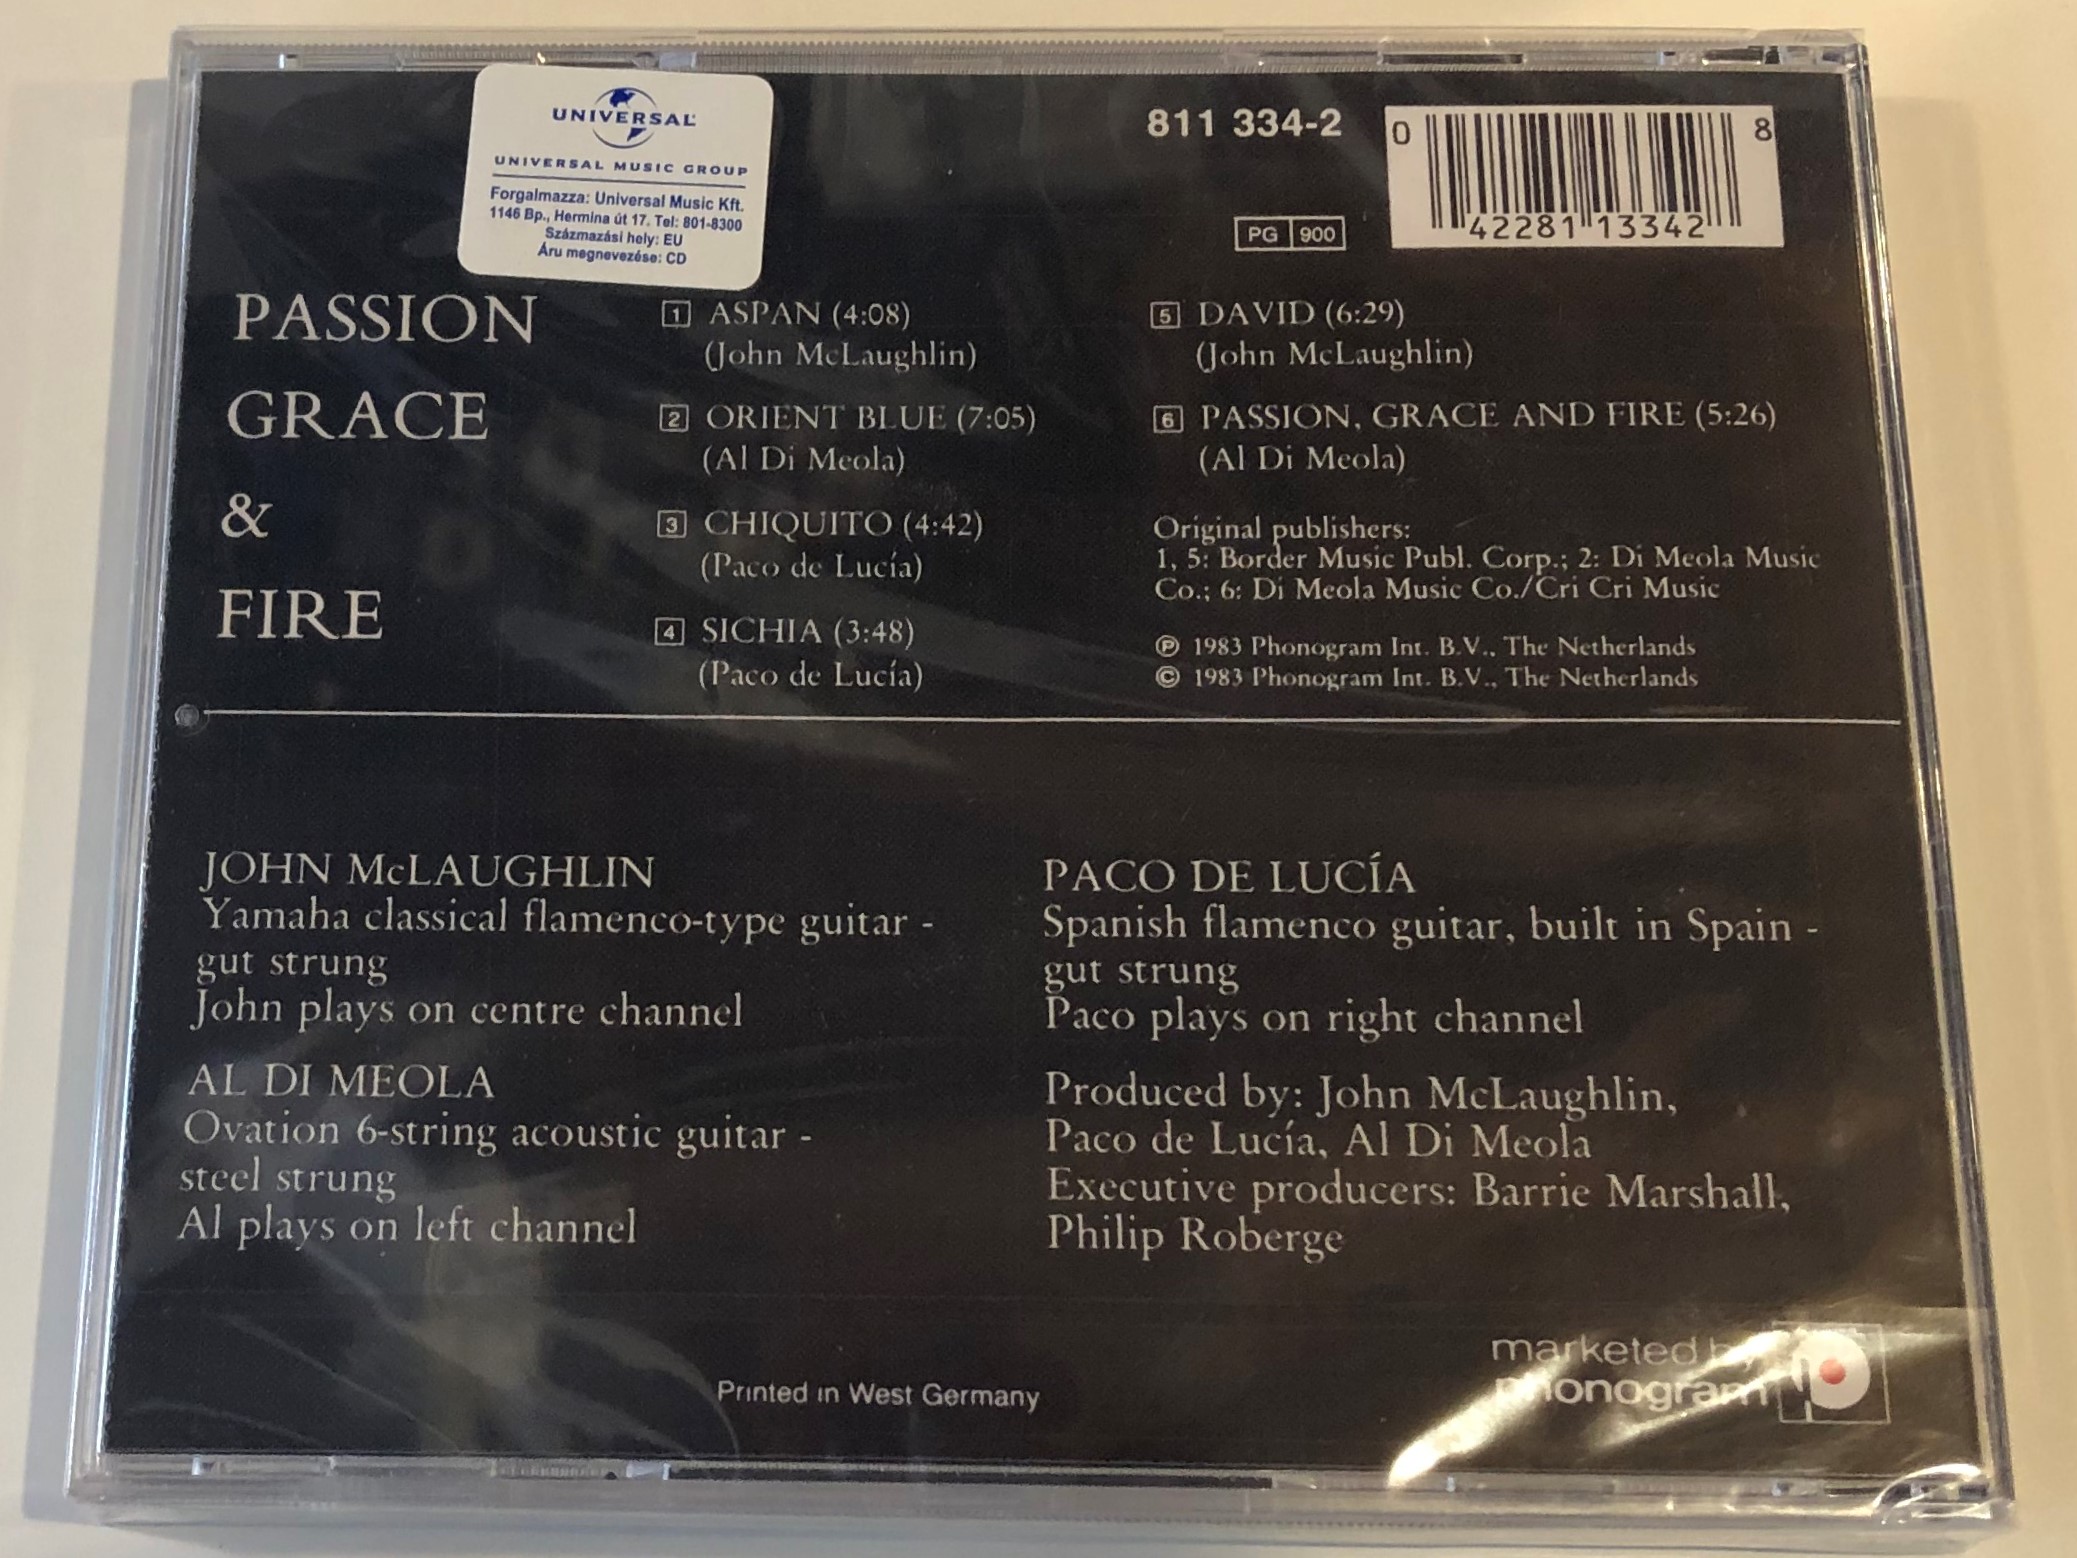 passion-grace-fire-john-mclaughlin-al-di-meola-paco-de-lucia-phonogram-int.-audio-cd-1983-811-334-2-2-.jpg